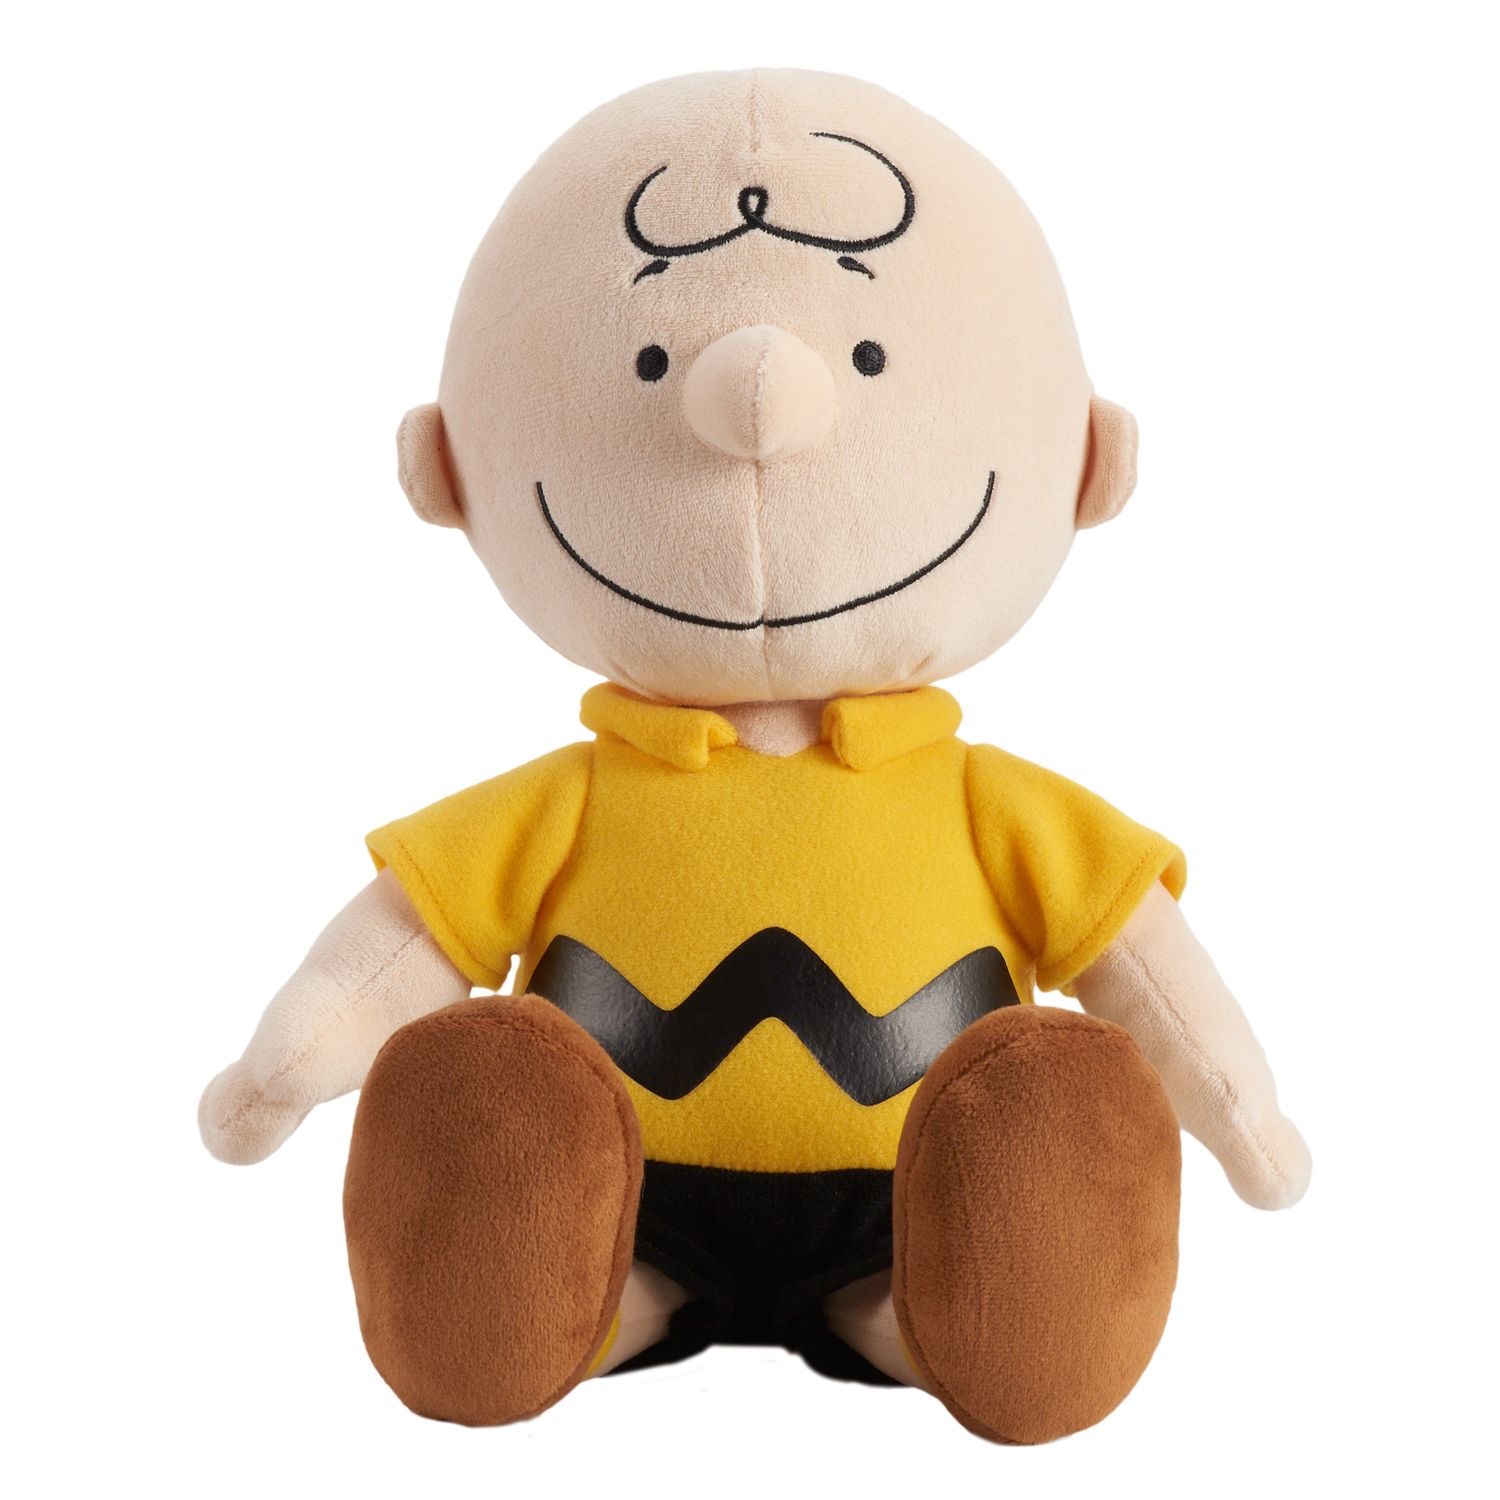 charlie brown stuffed characters